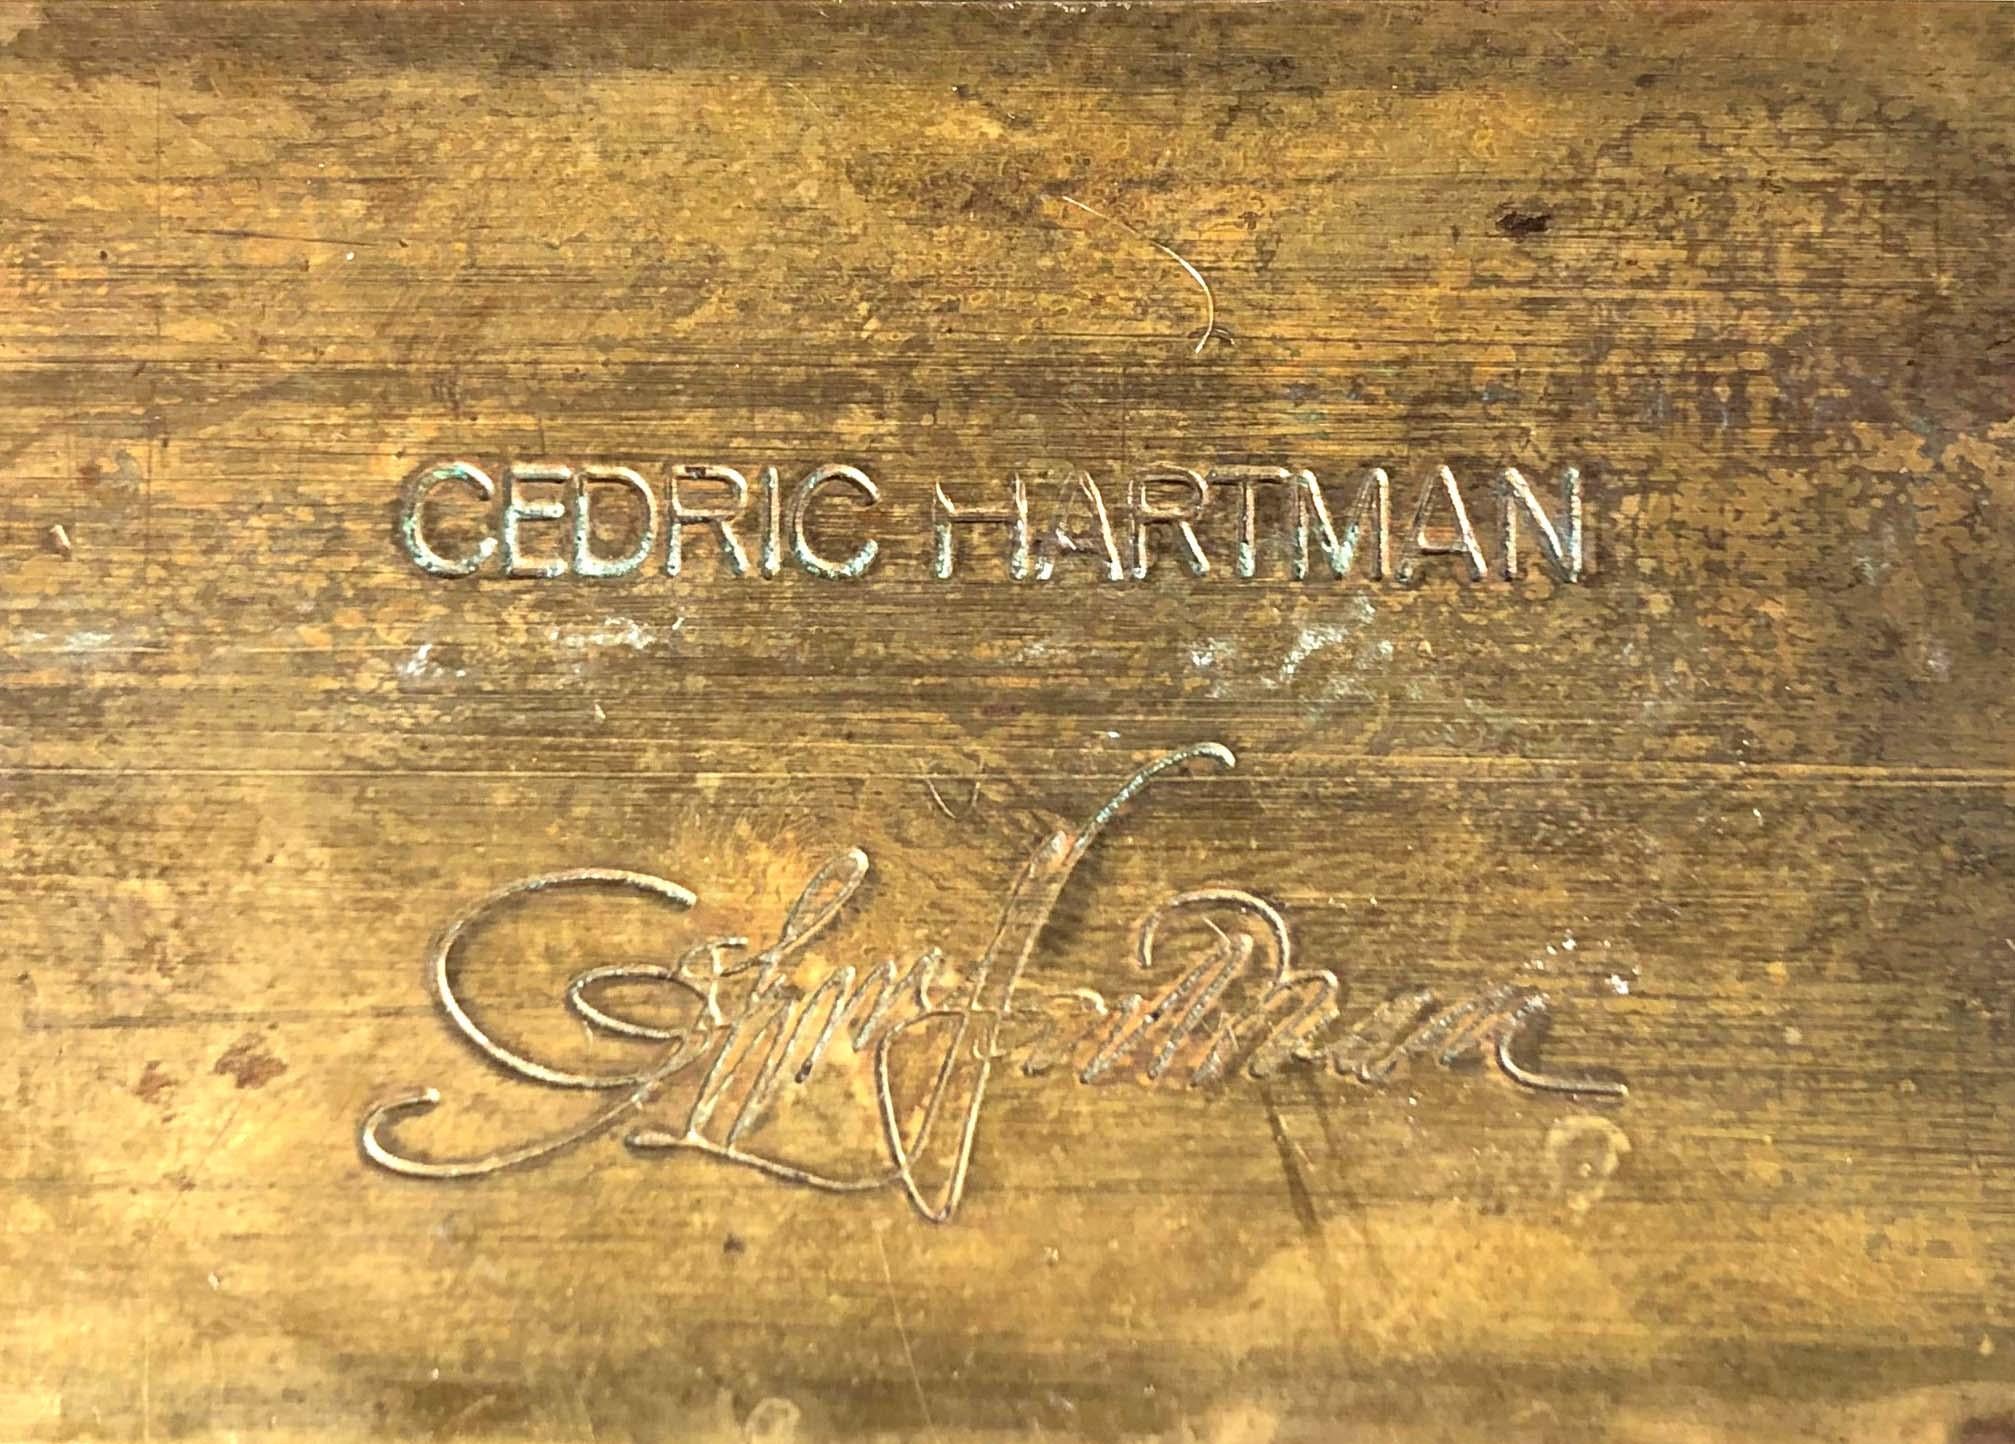 Cedric Hartman Swiveling Brass Floor Lamp 6